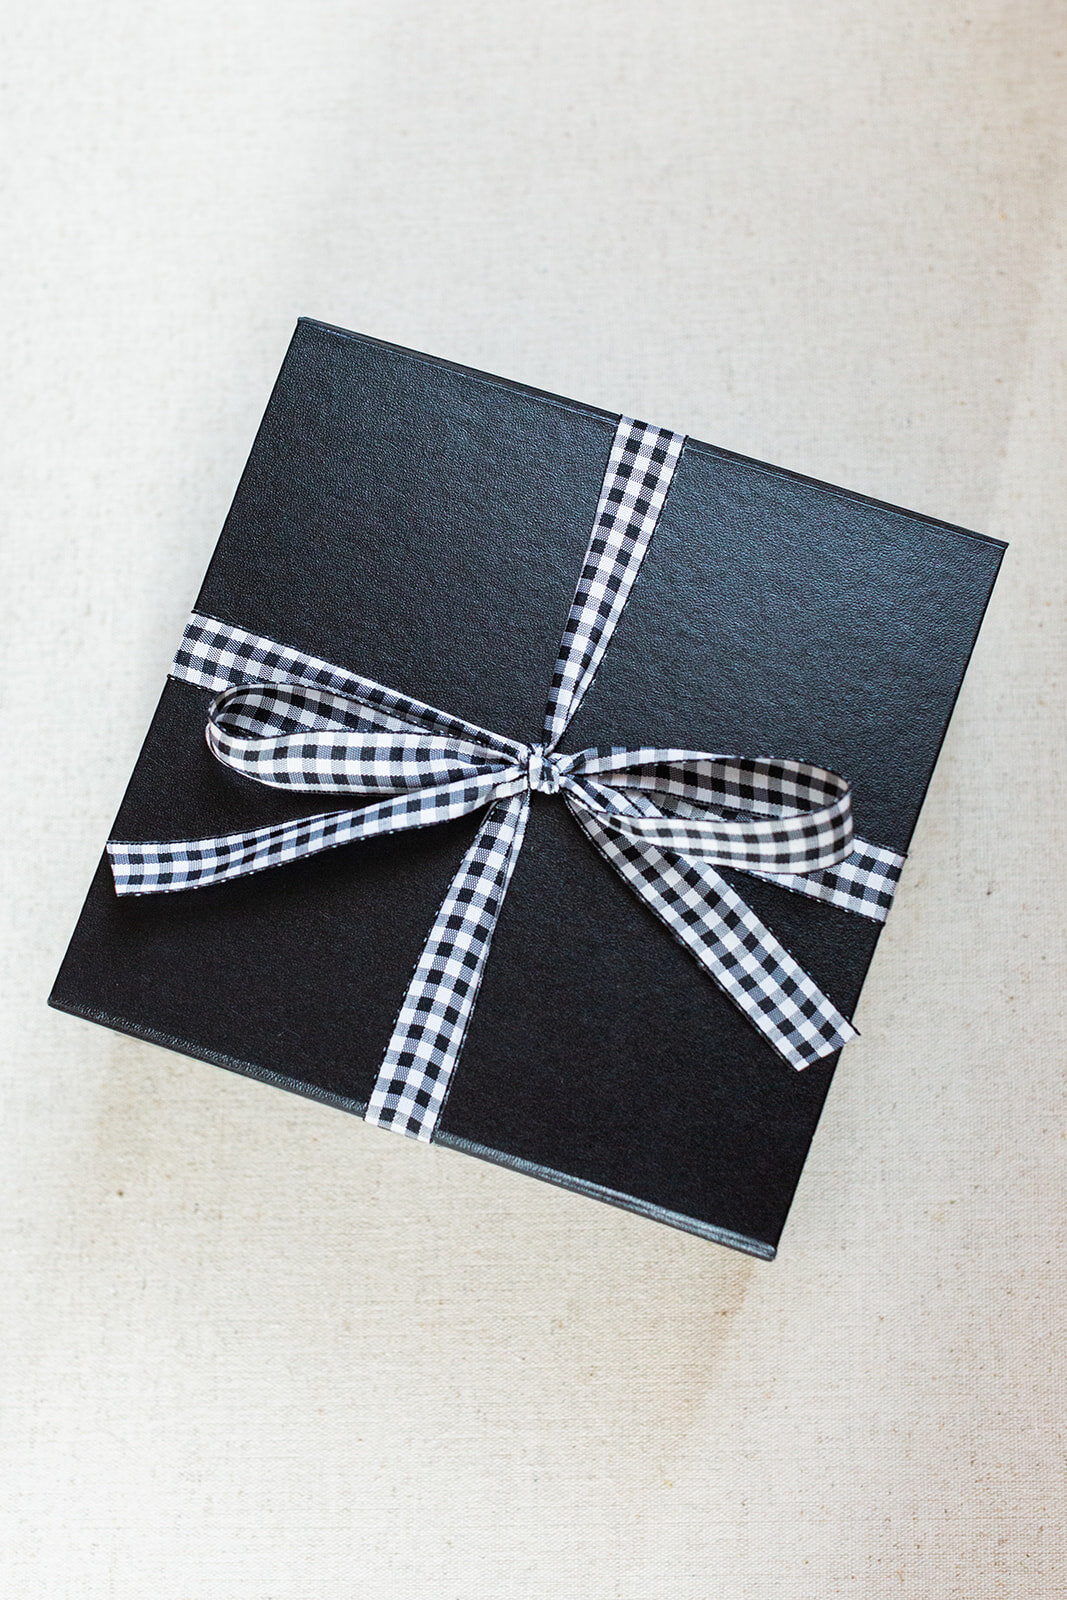 Black and White Host Gift Box